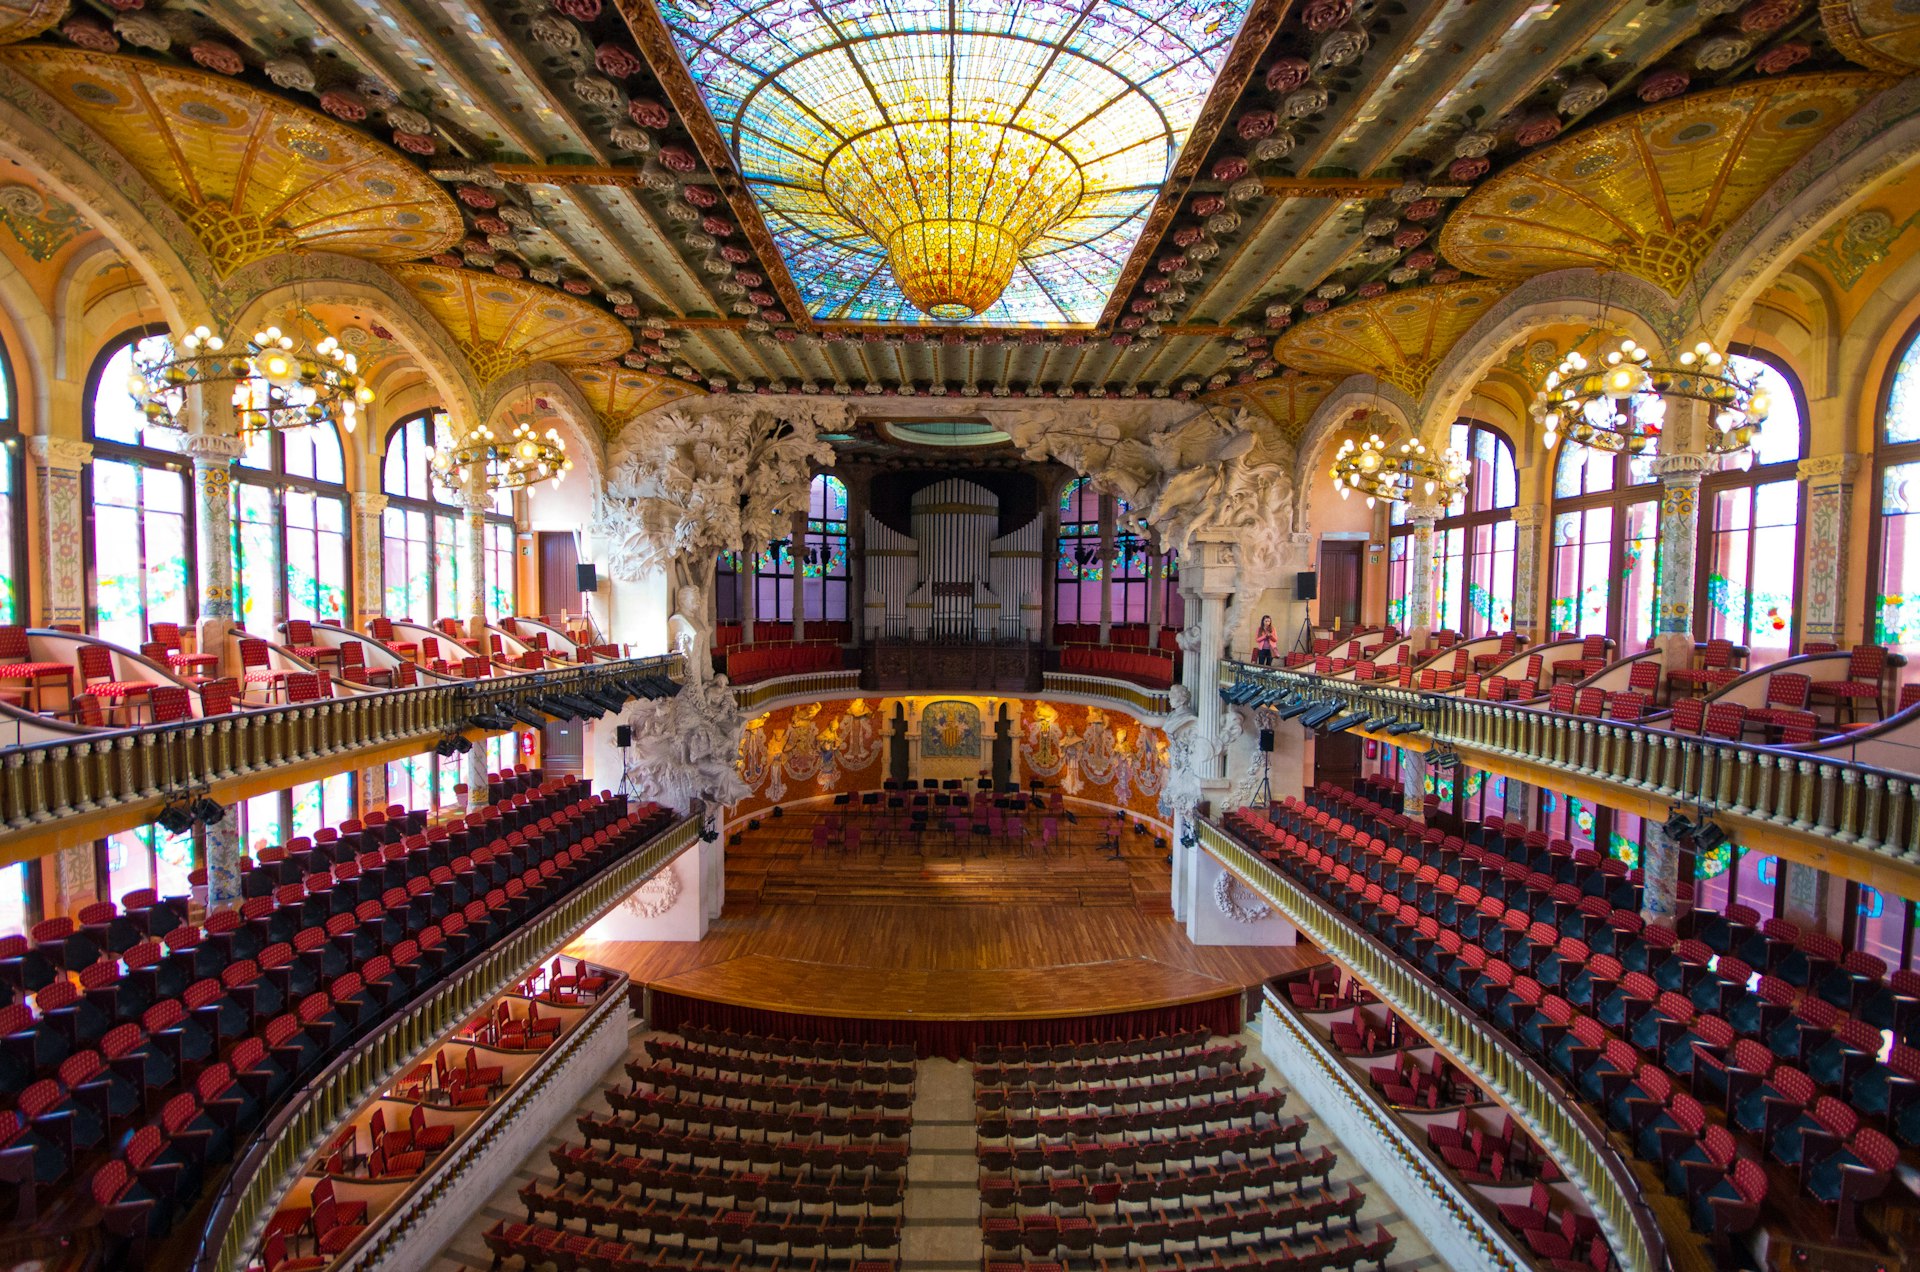 Interior view of Palau de la Musica Catalana in Barcelona, Spain